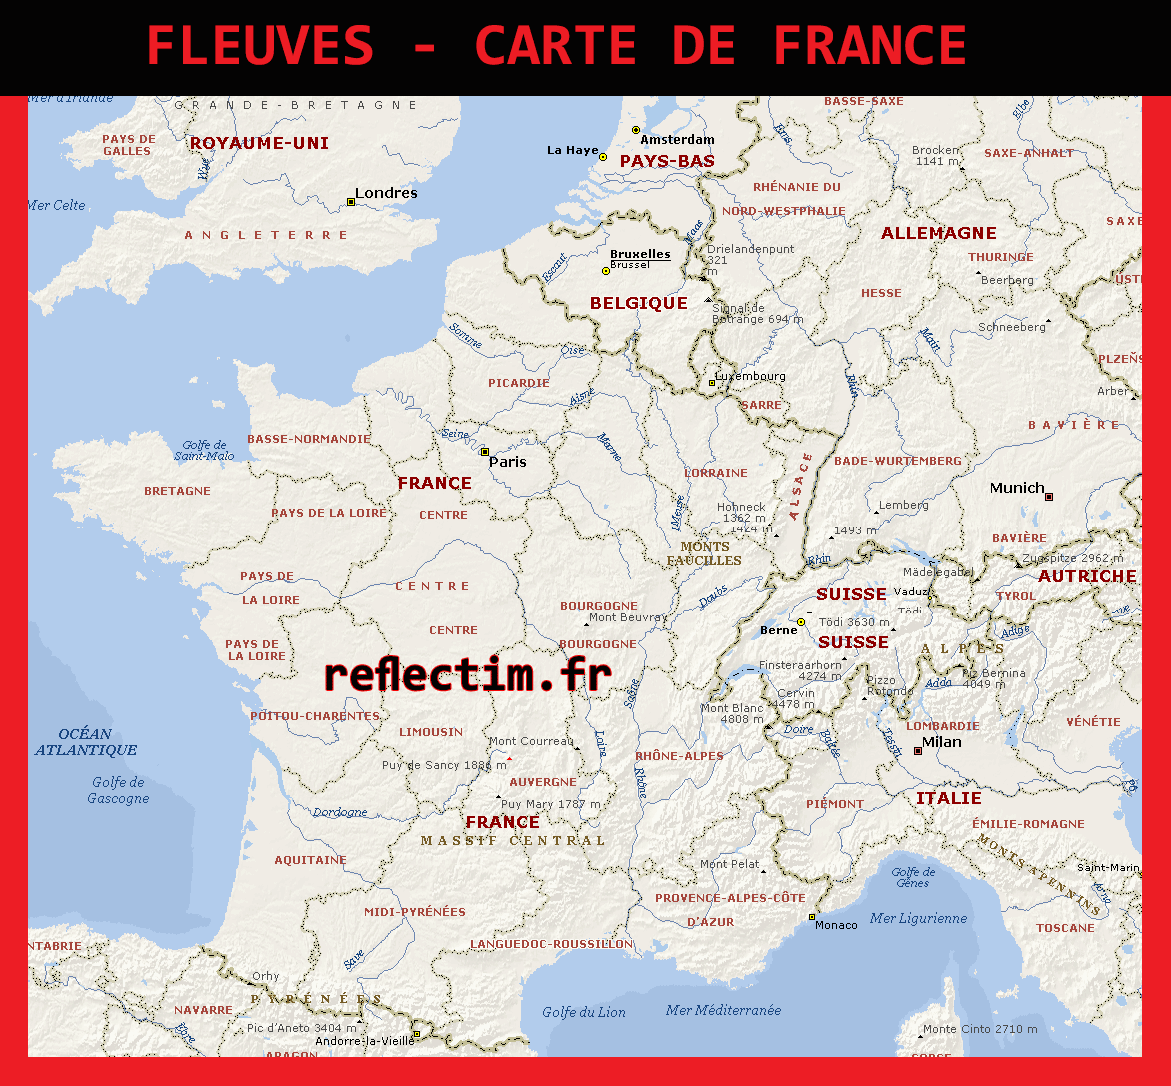 Carte de France fleuves